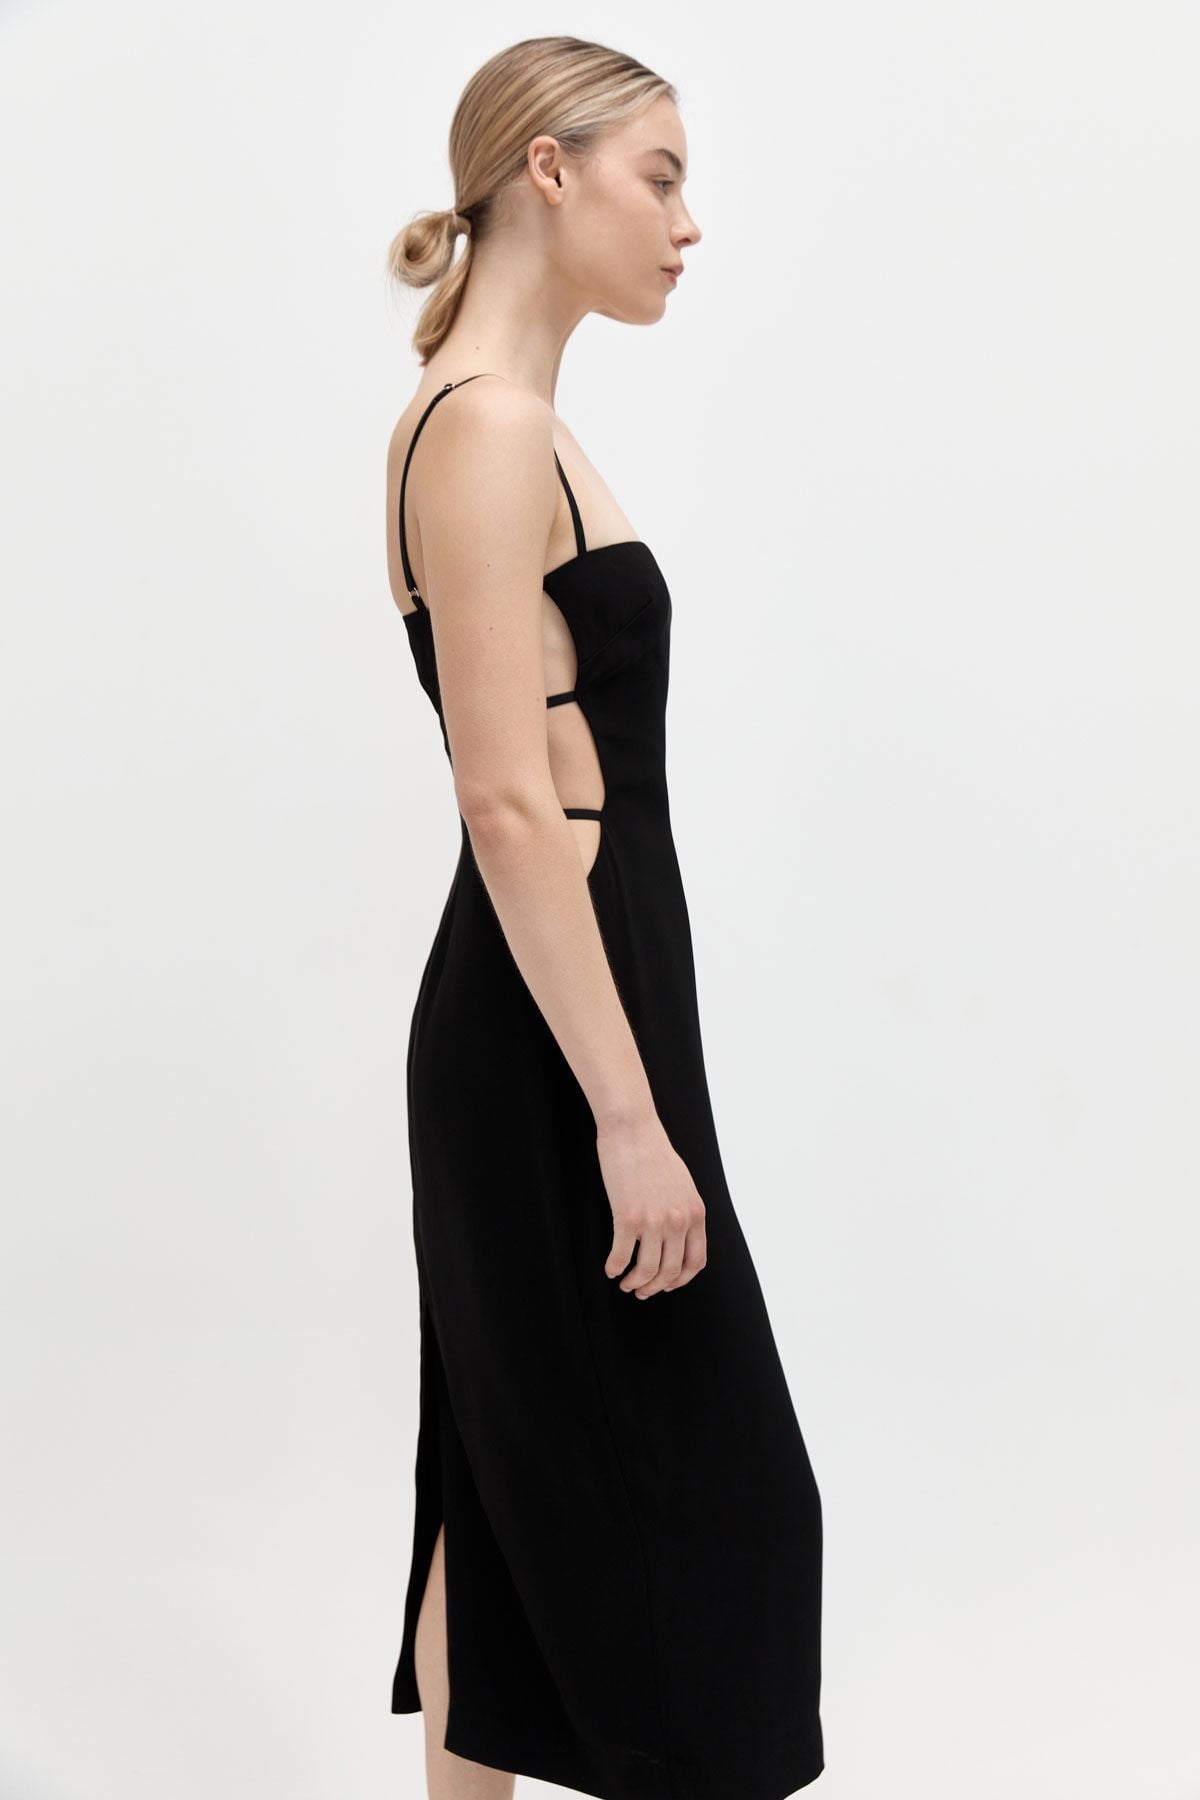 URBAIN MIDI DRESS-BLACK Dress ST AGNI 